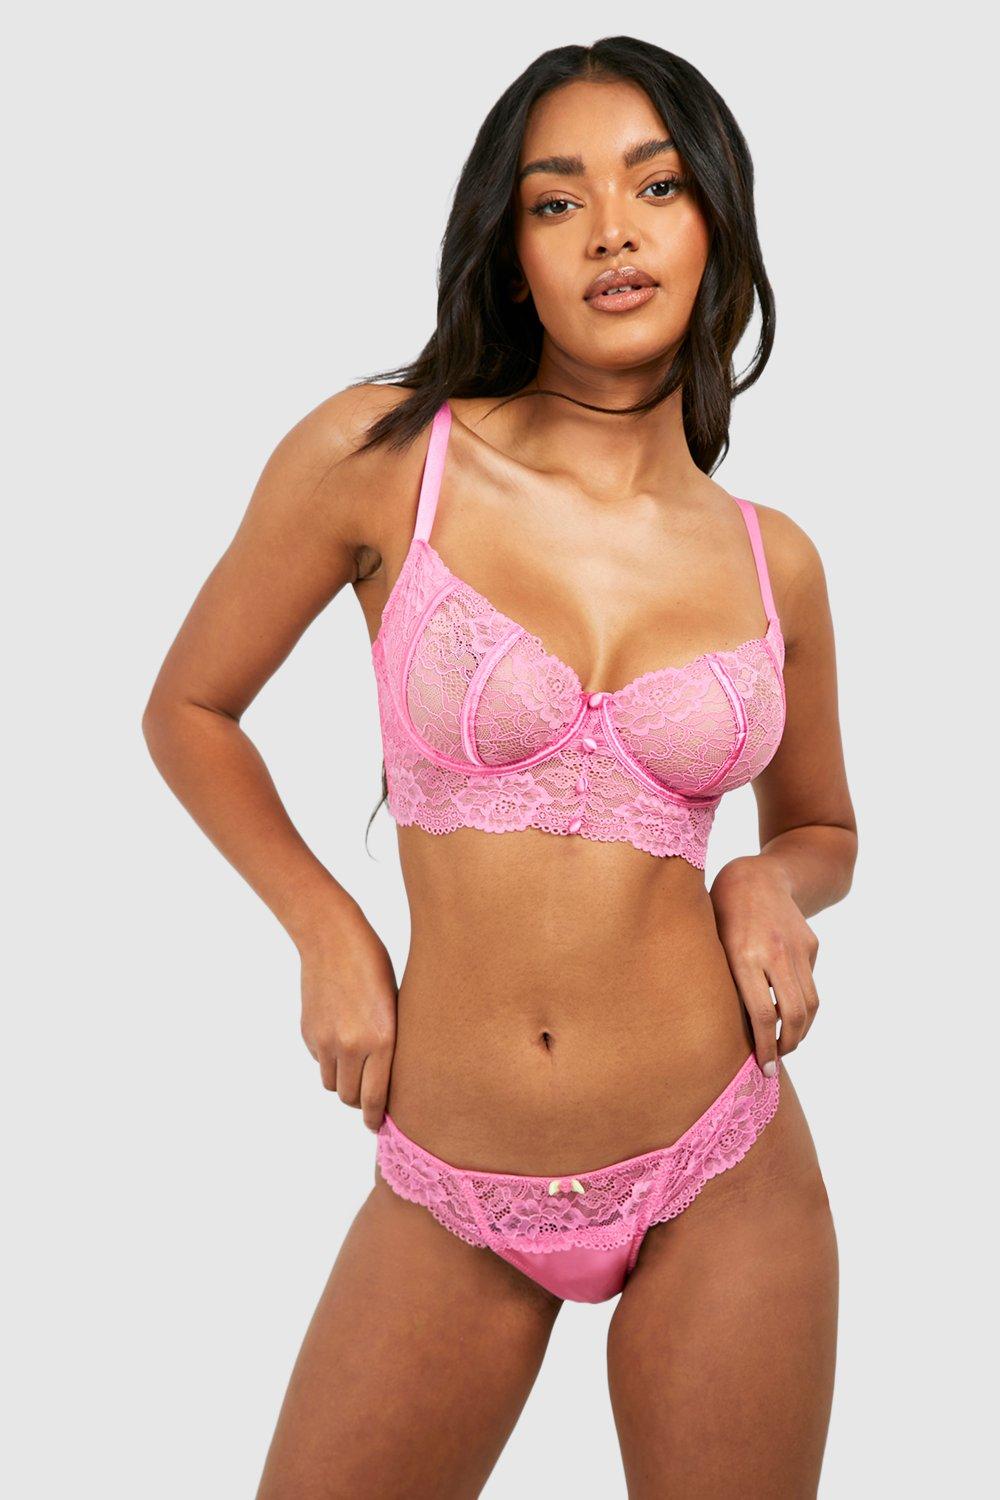 https://media.boohoo.com/i/boohoo/gzz73590_pink_xl_4/female-pink-button-detail-lace-fuller-bust-long-line-bra